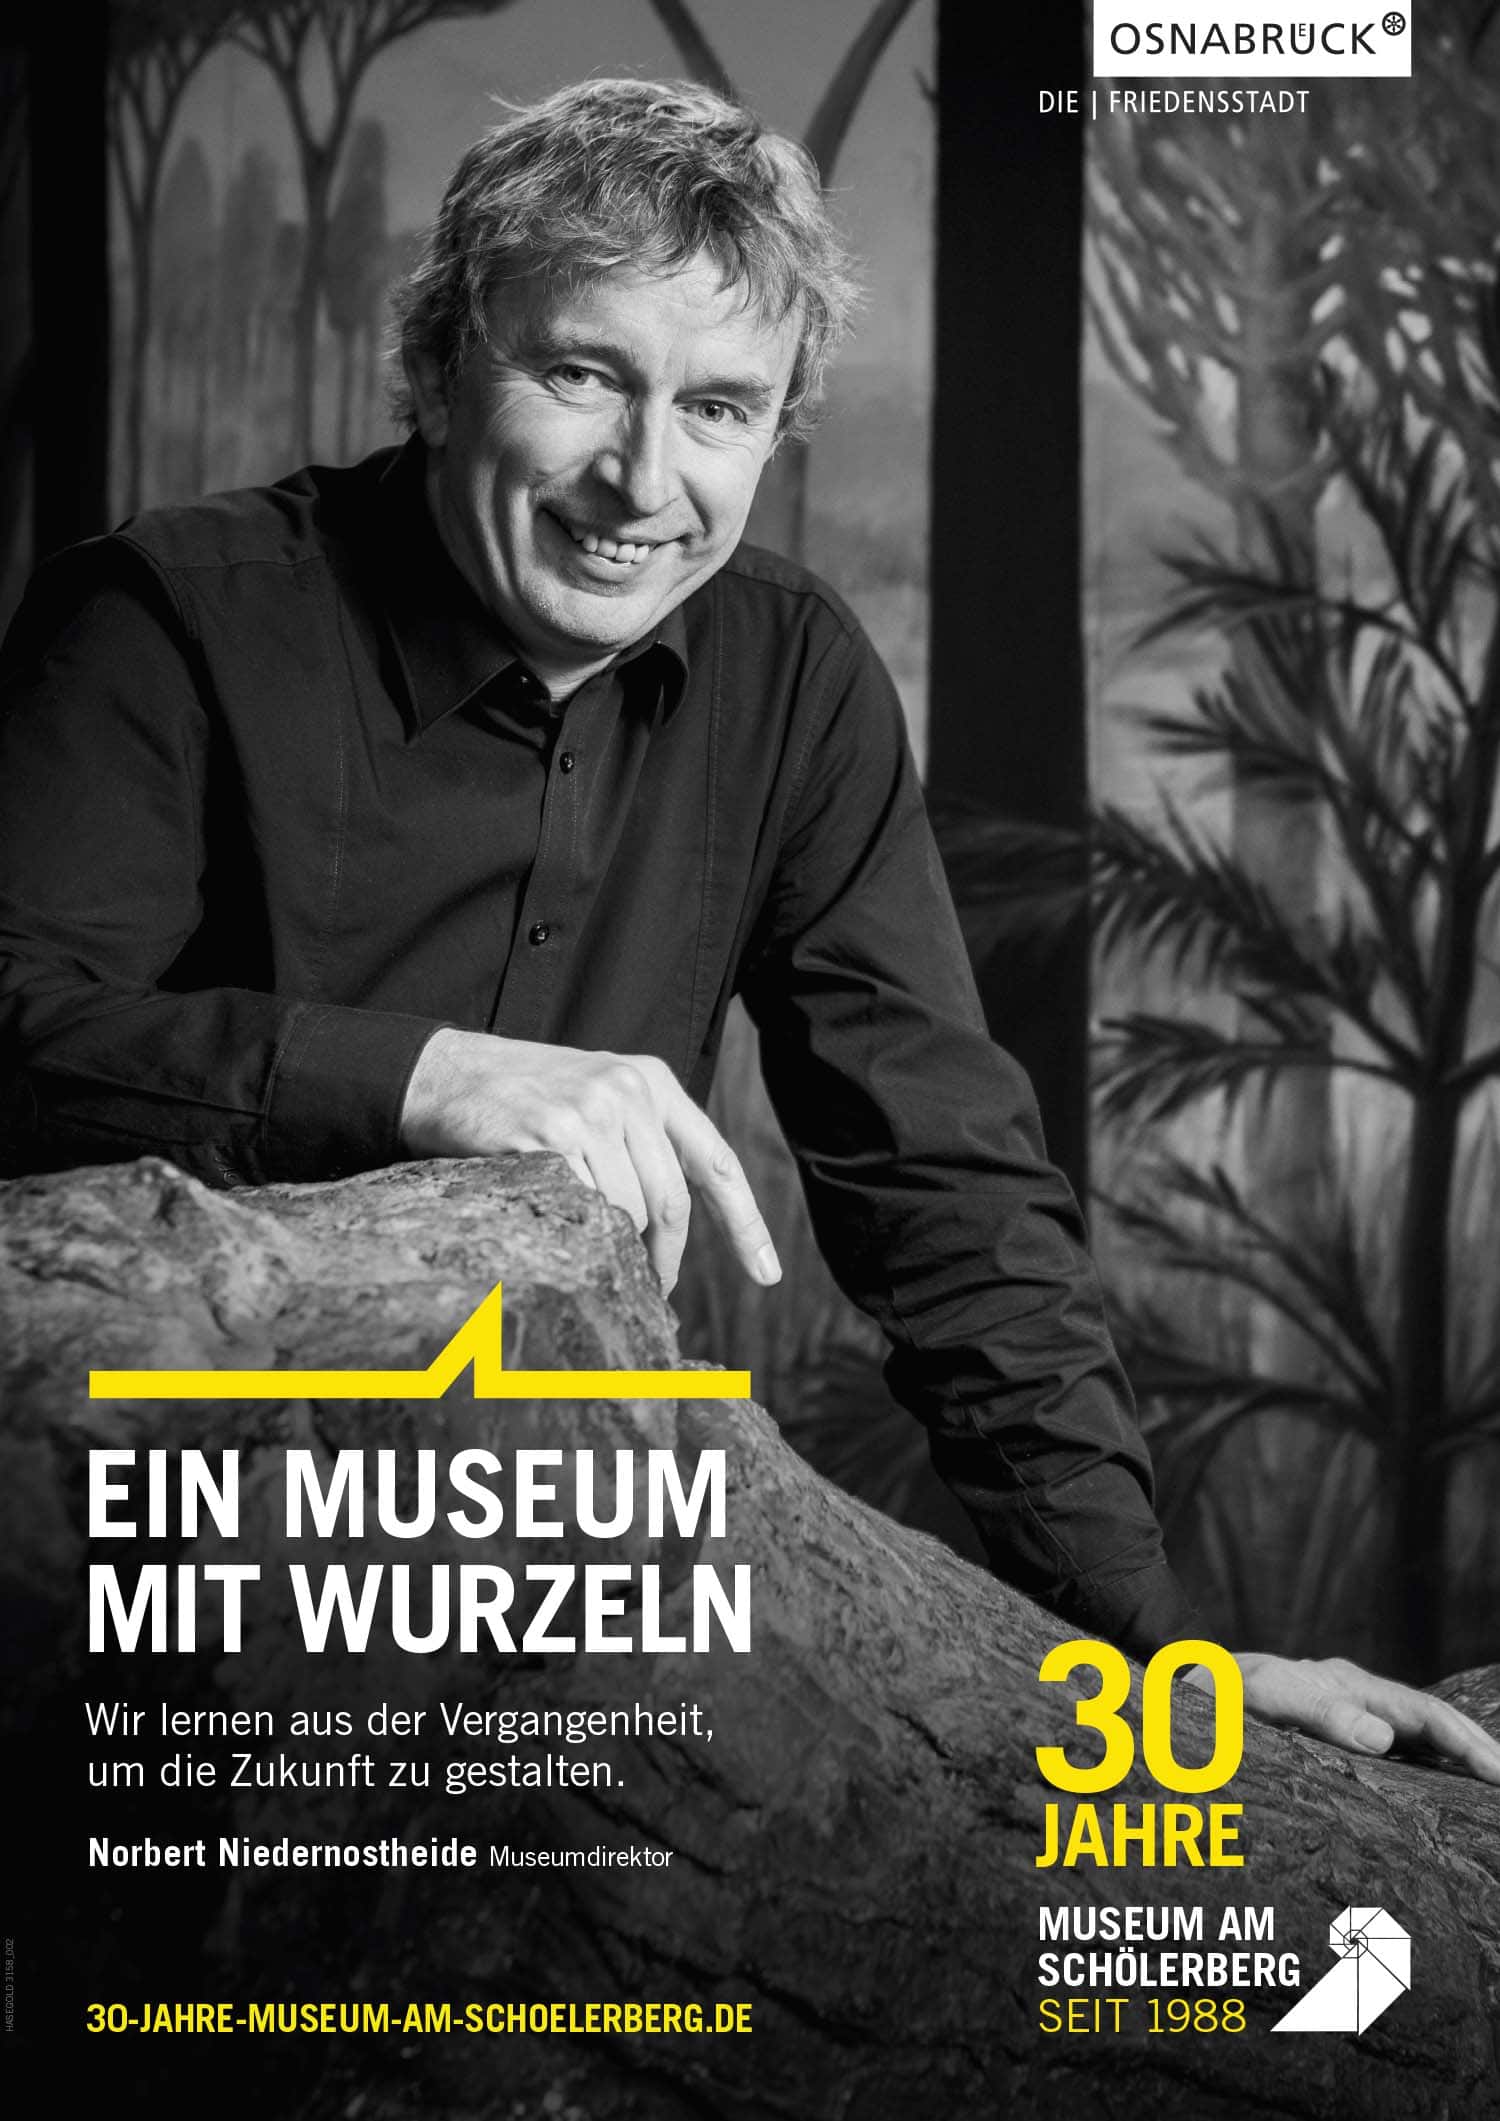 Plakat Osnabrück: Die Plakatserie für das Museum am Schölerberg zeigt Norbert Niedernostheide